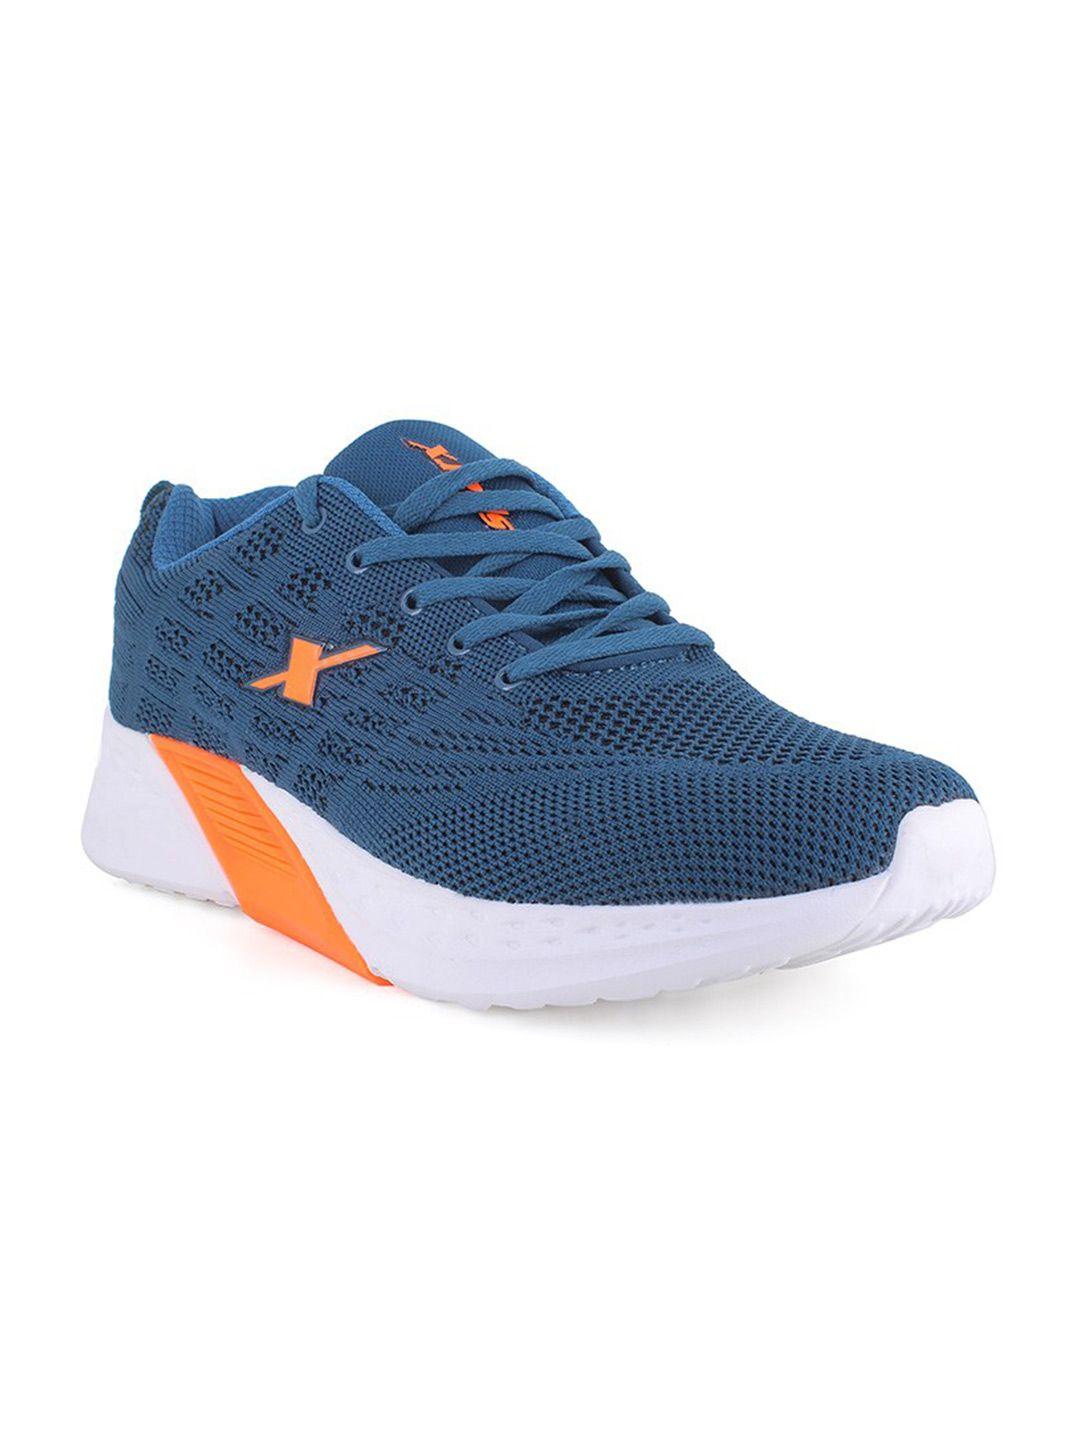 sparx men turquoise blue & orange textile high-top running non-marking shoes